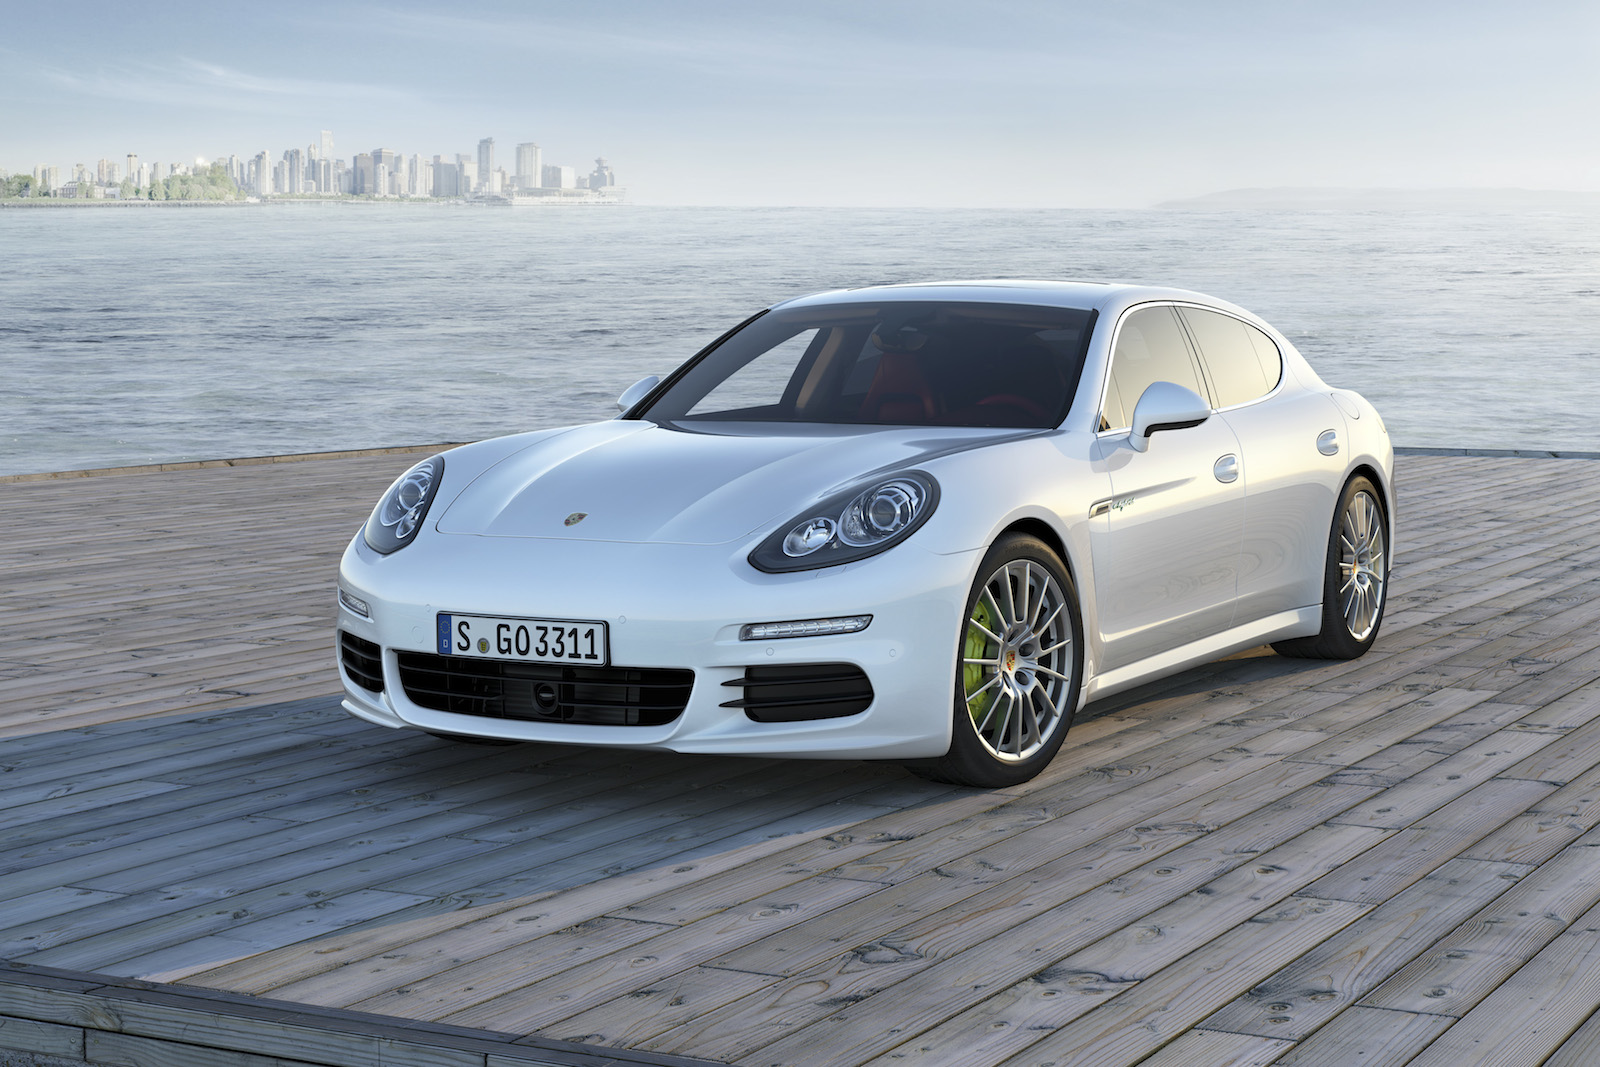 Đánh giá xe Porsche Panamera 2015